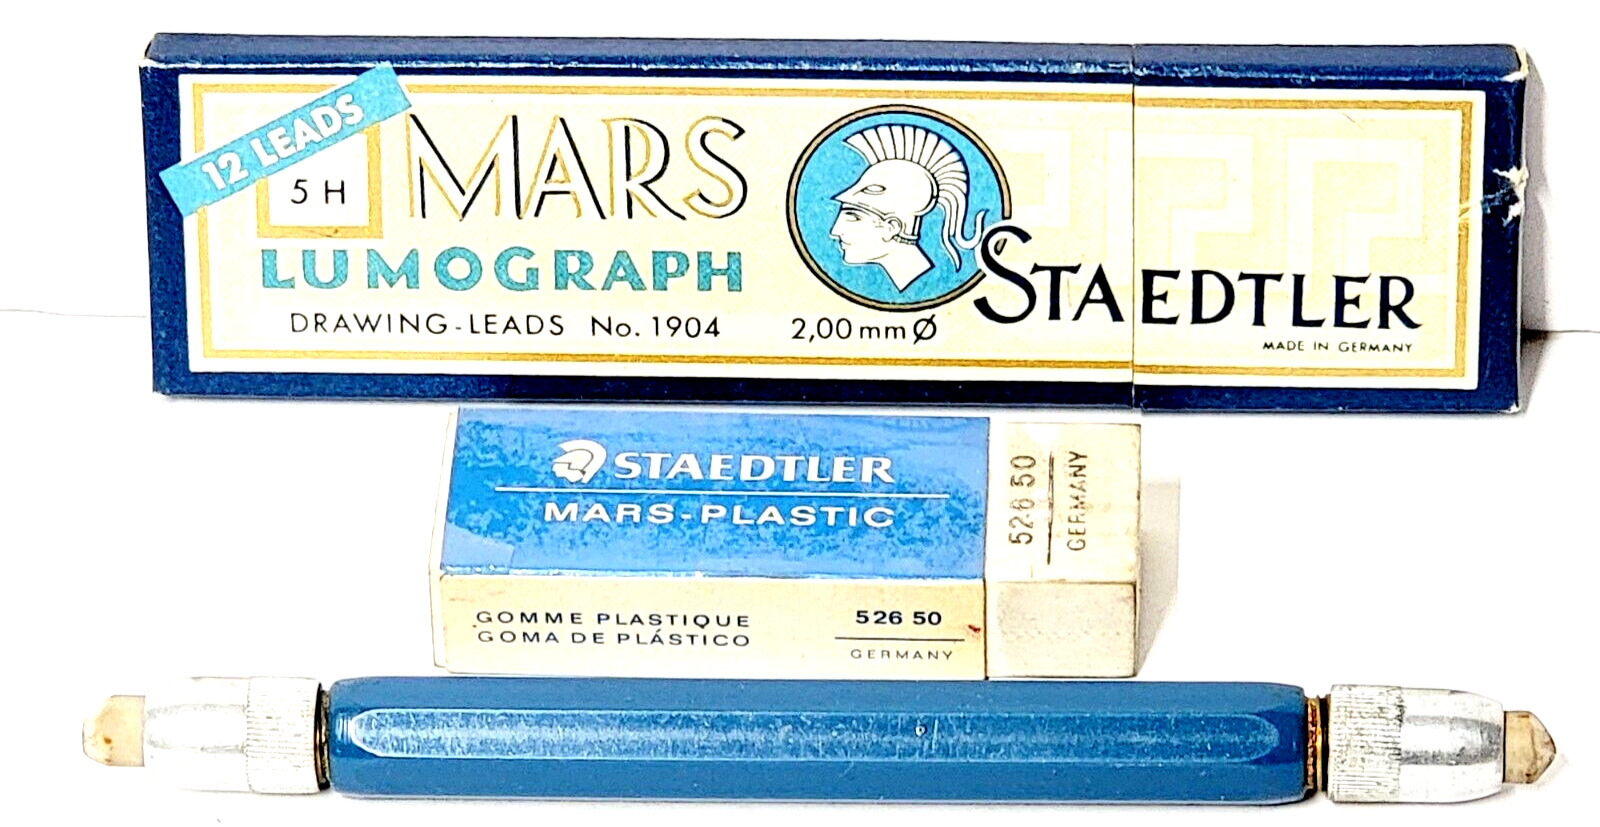 Vintage Vemco Tec Drafting Eraser Blue / Staedtler Mars Lumograph Drawing Leads